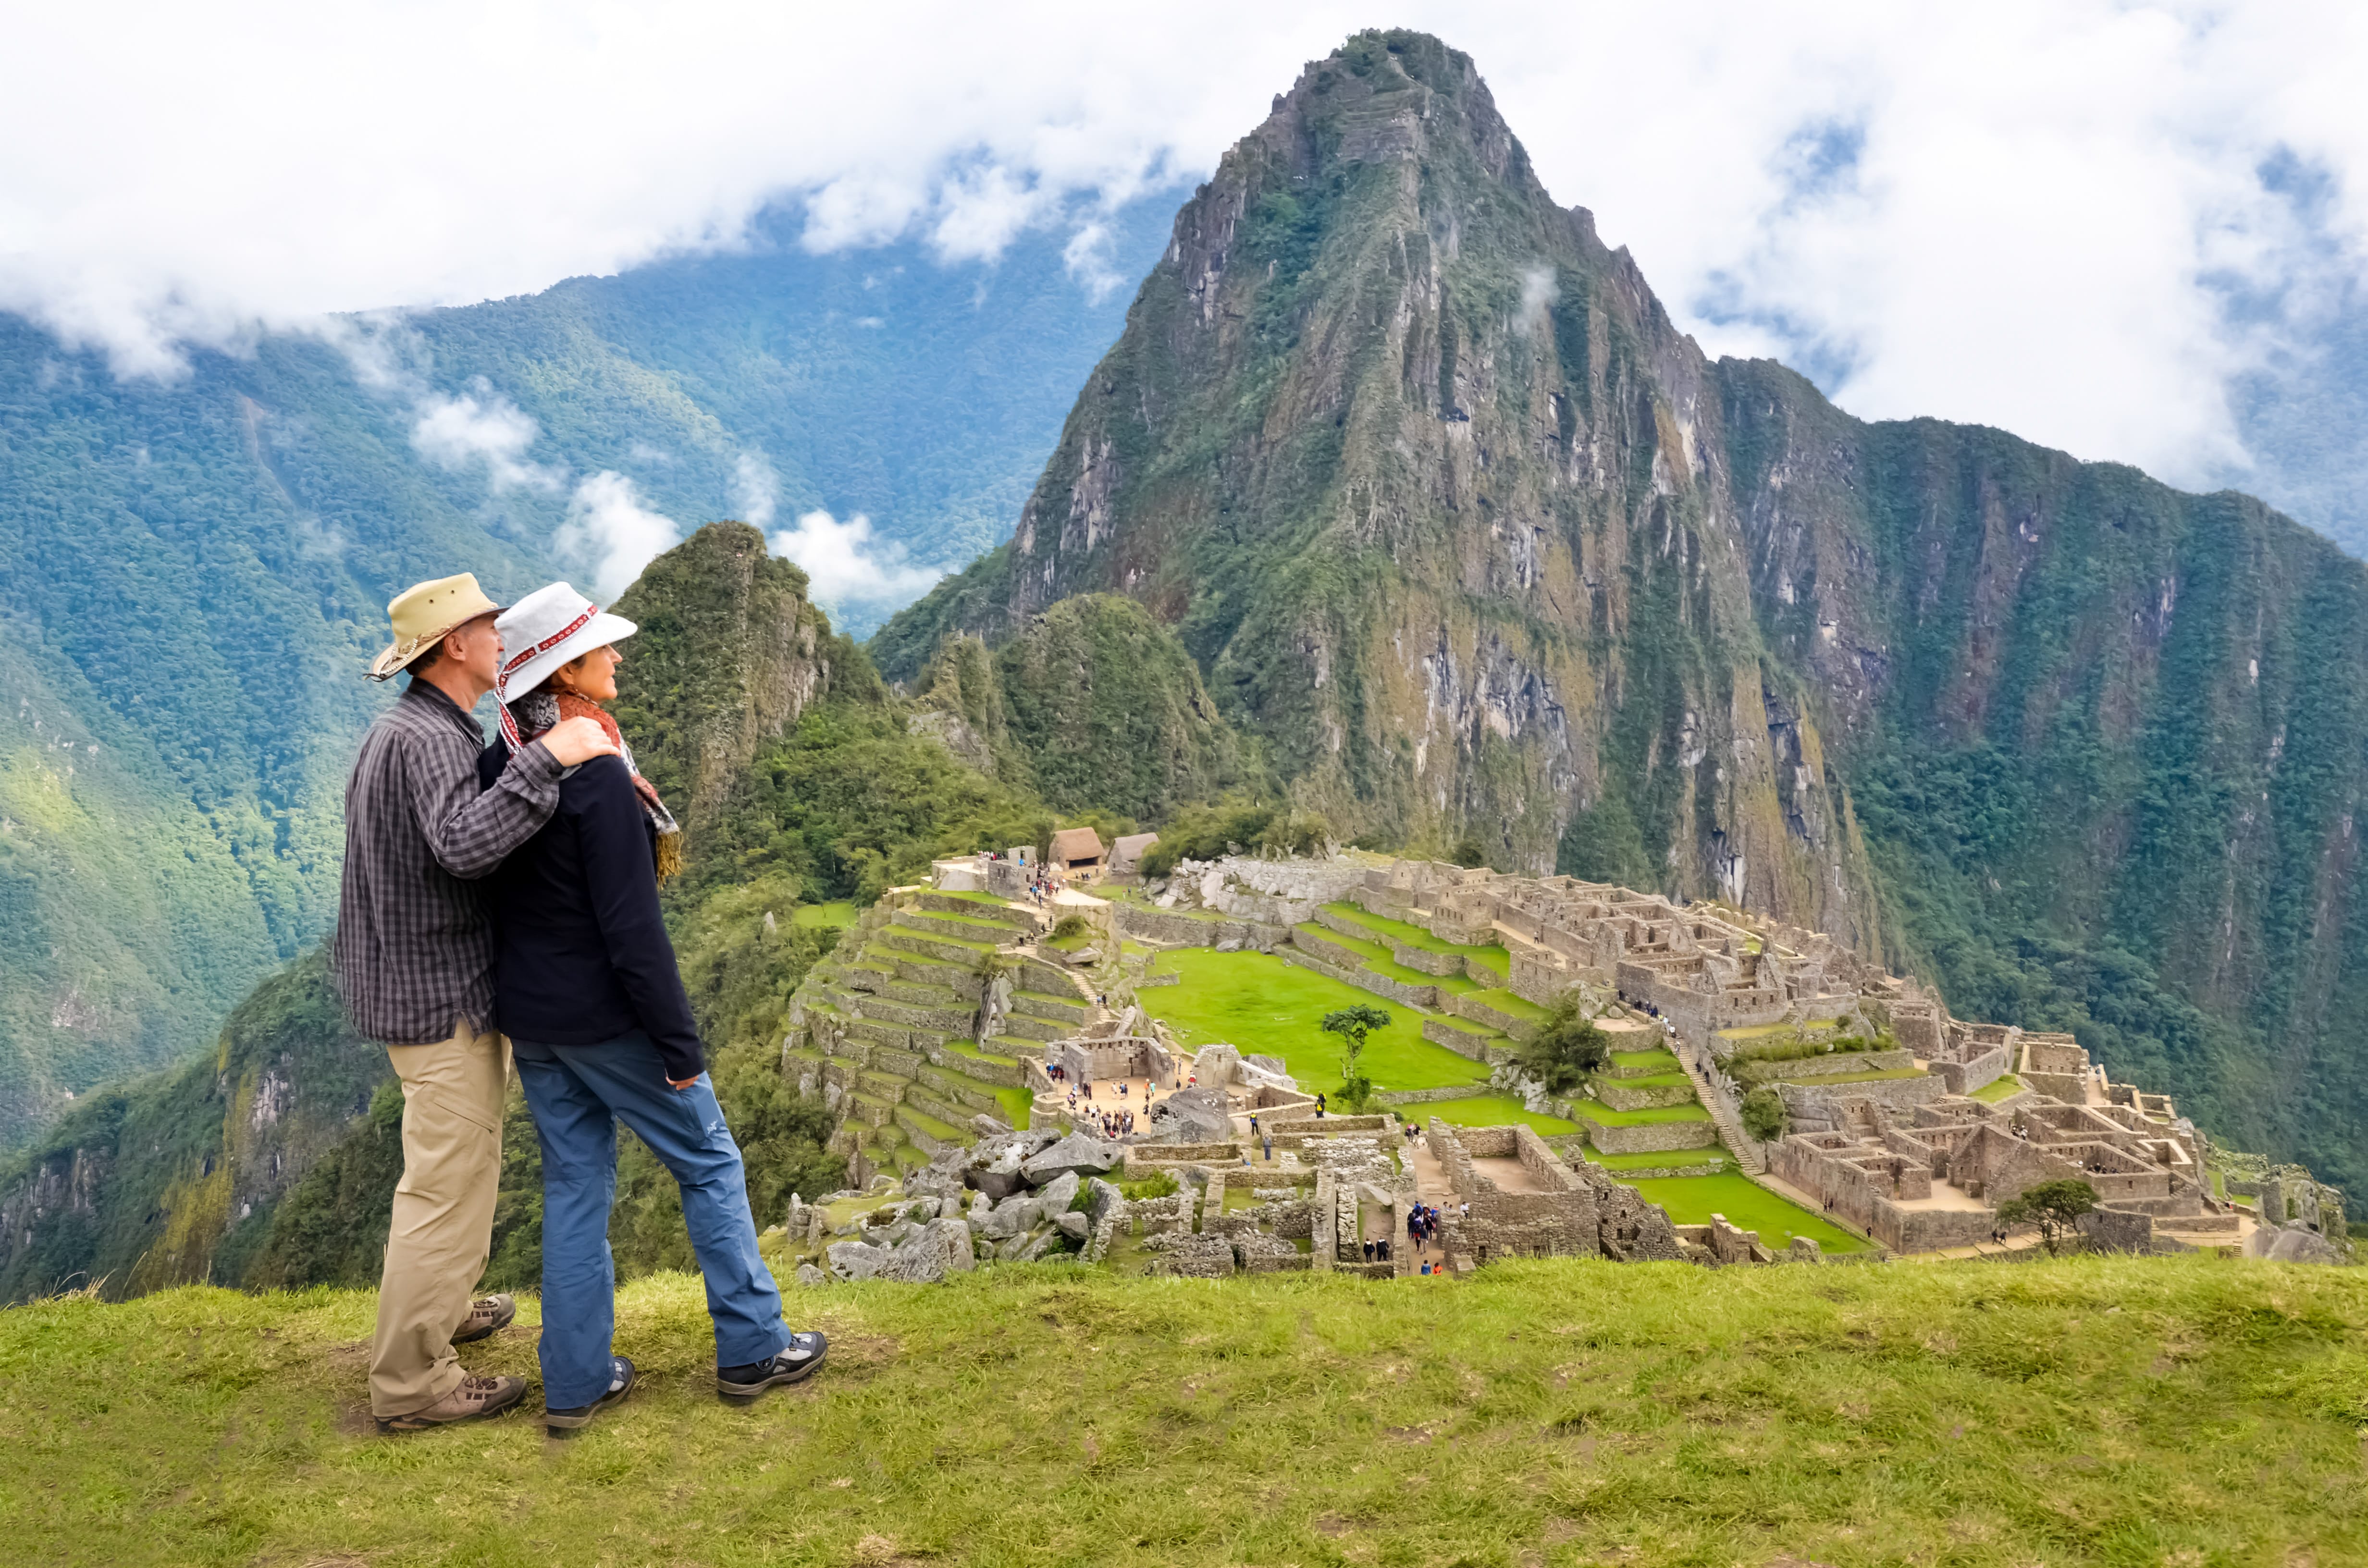 Baby boomers at the peak of Machu Picchu